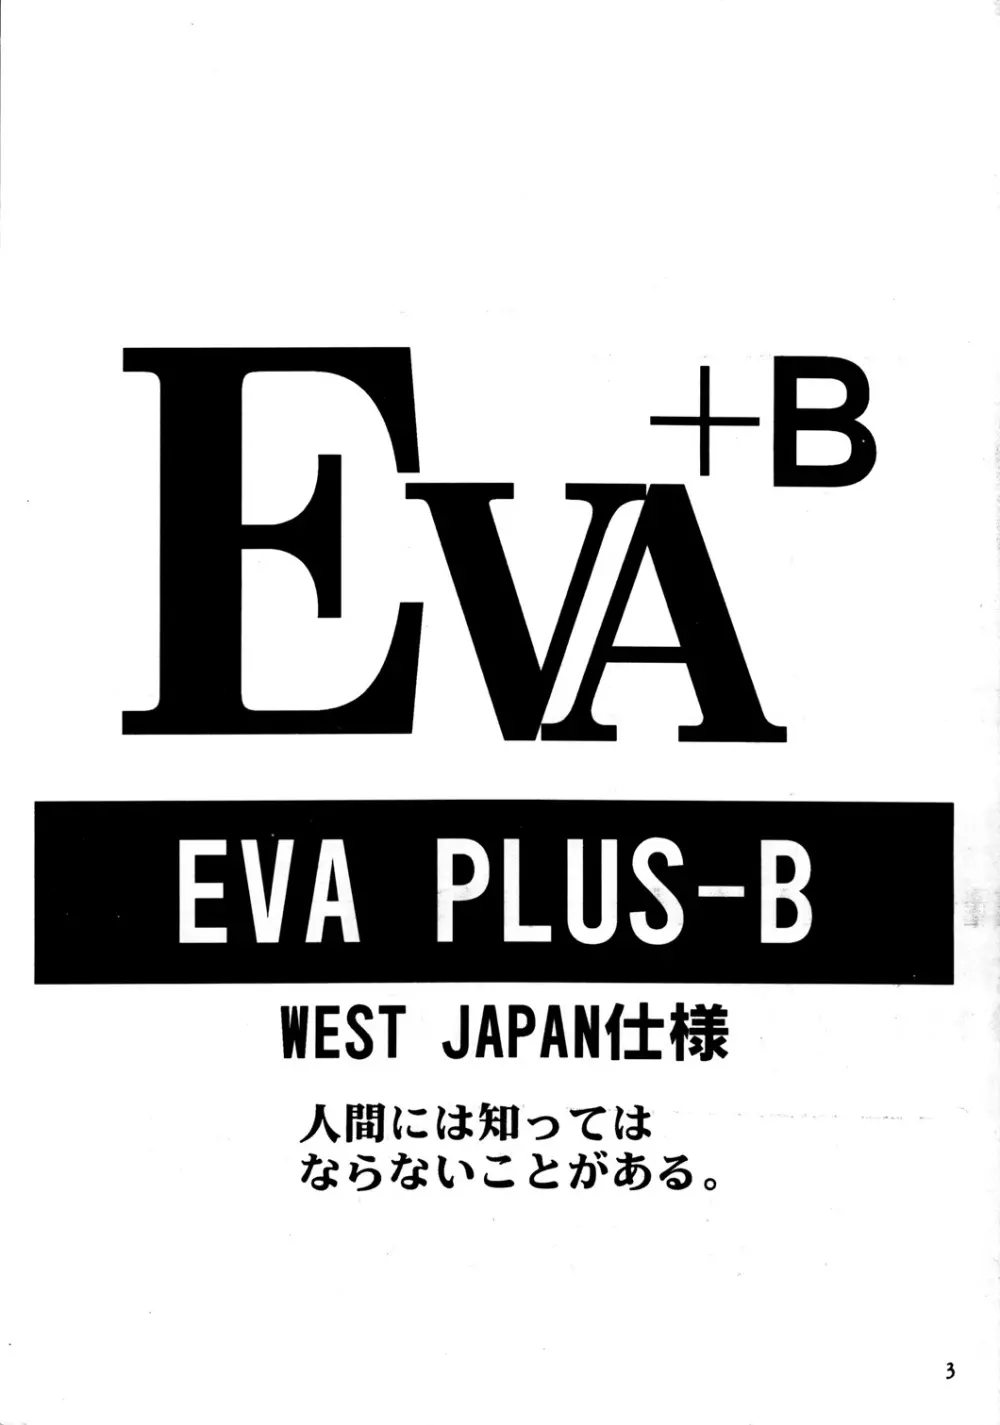 EVA PLUS B WEST JAPAN 仕様 - page2